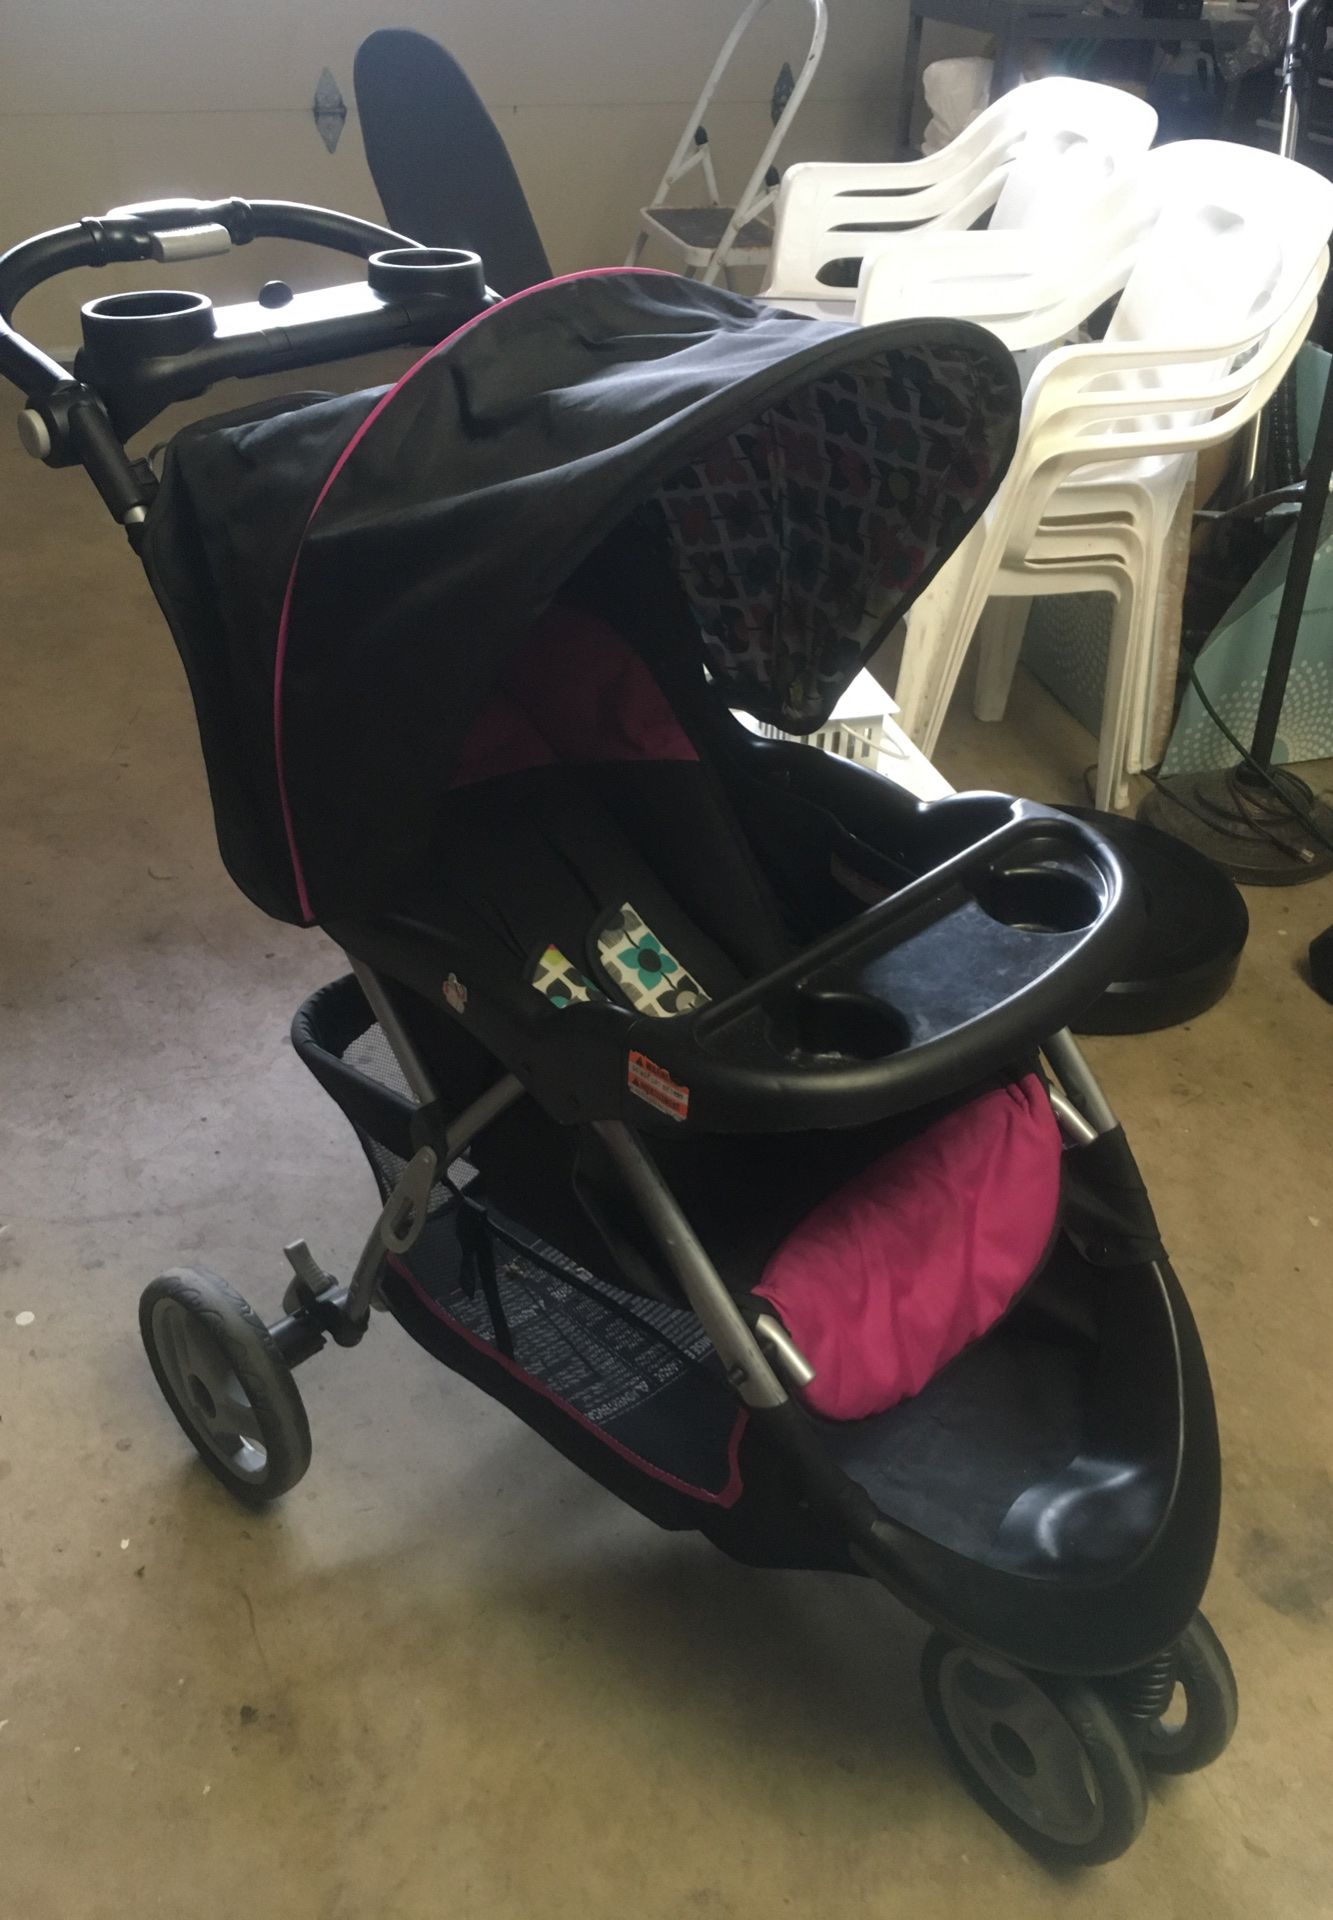 $20 baby stroller